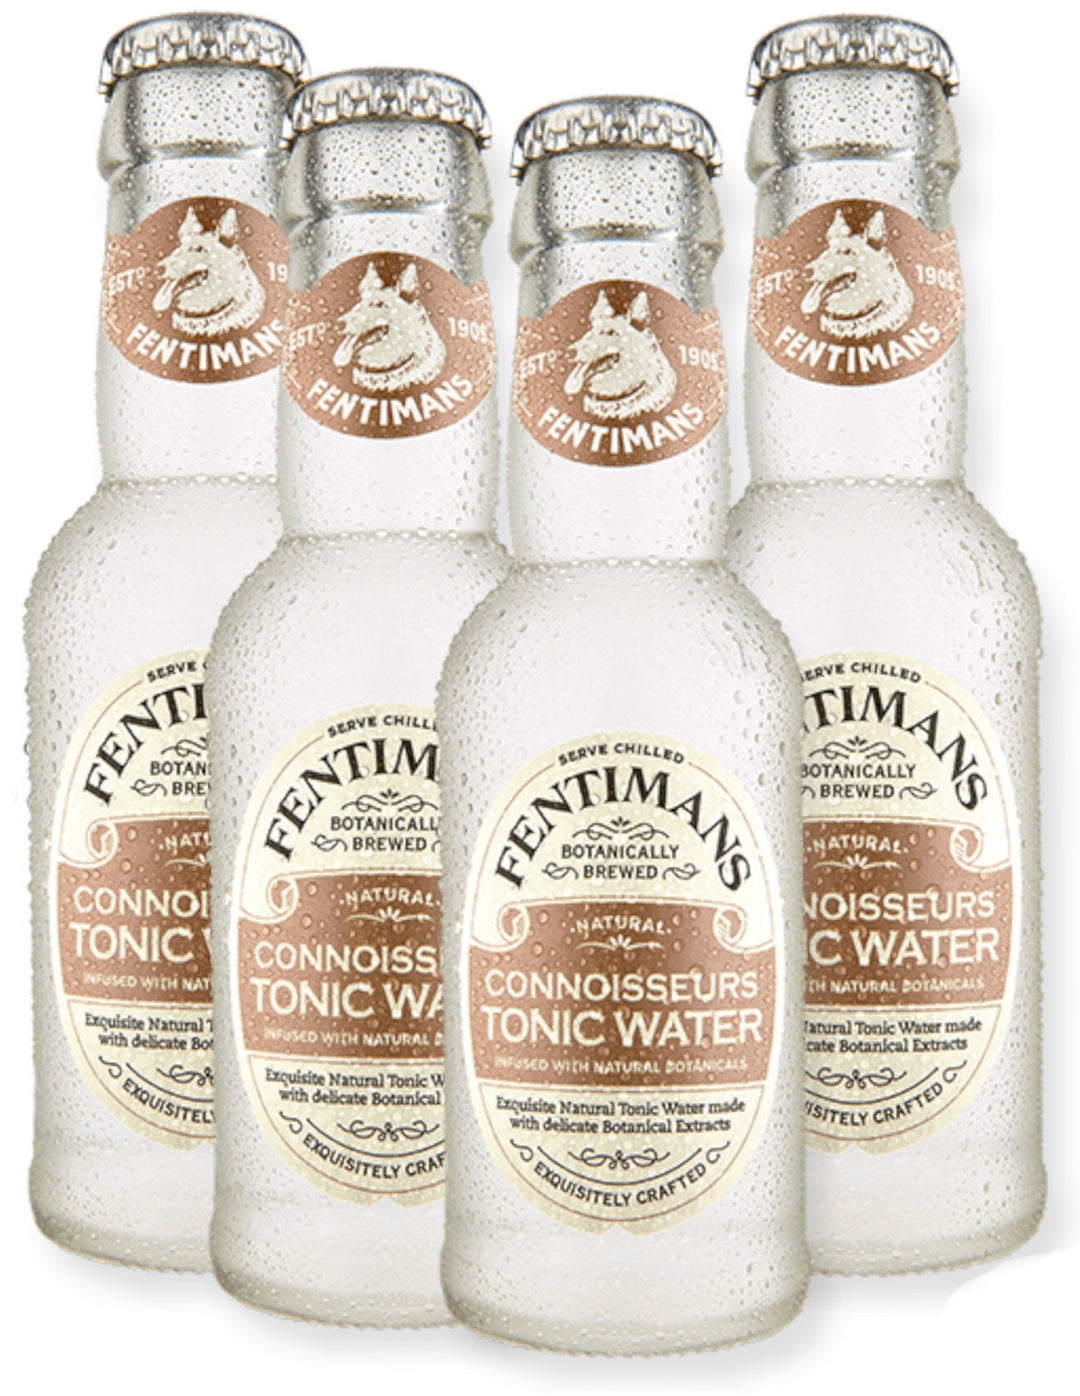 Fentimans - Connoisseurs Tonic Water 4er Pack